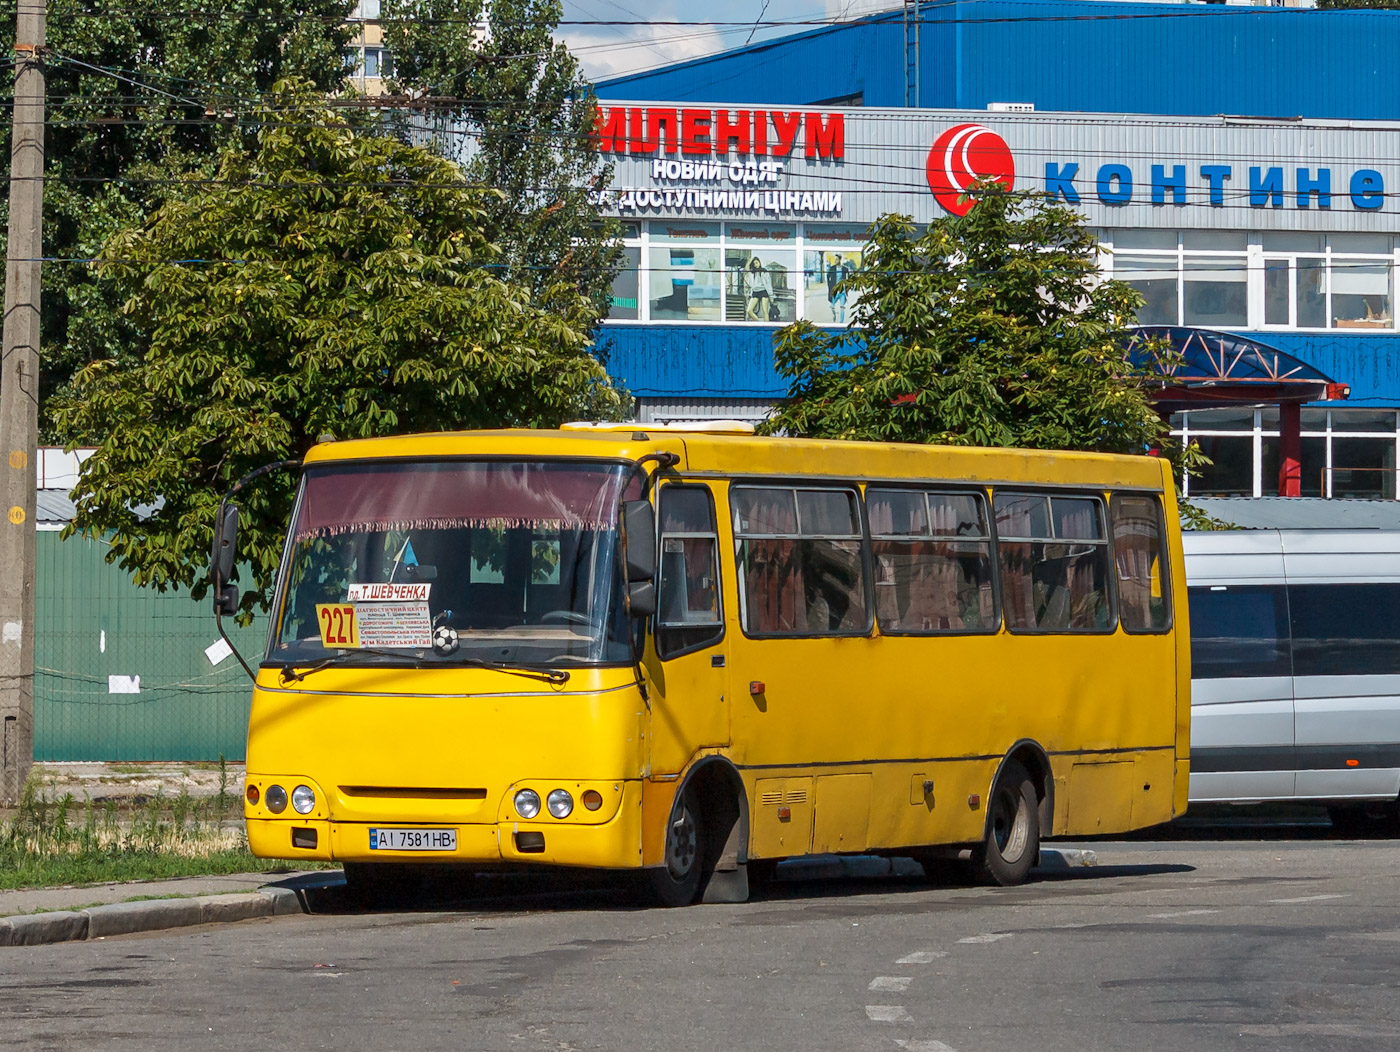 Kyiv, Bogdan А09201 No. АІ 7581 НВ